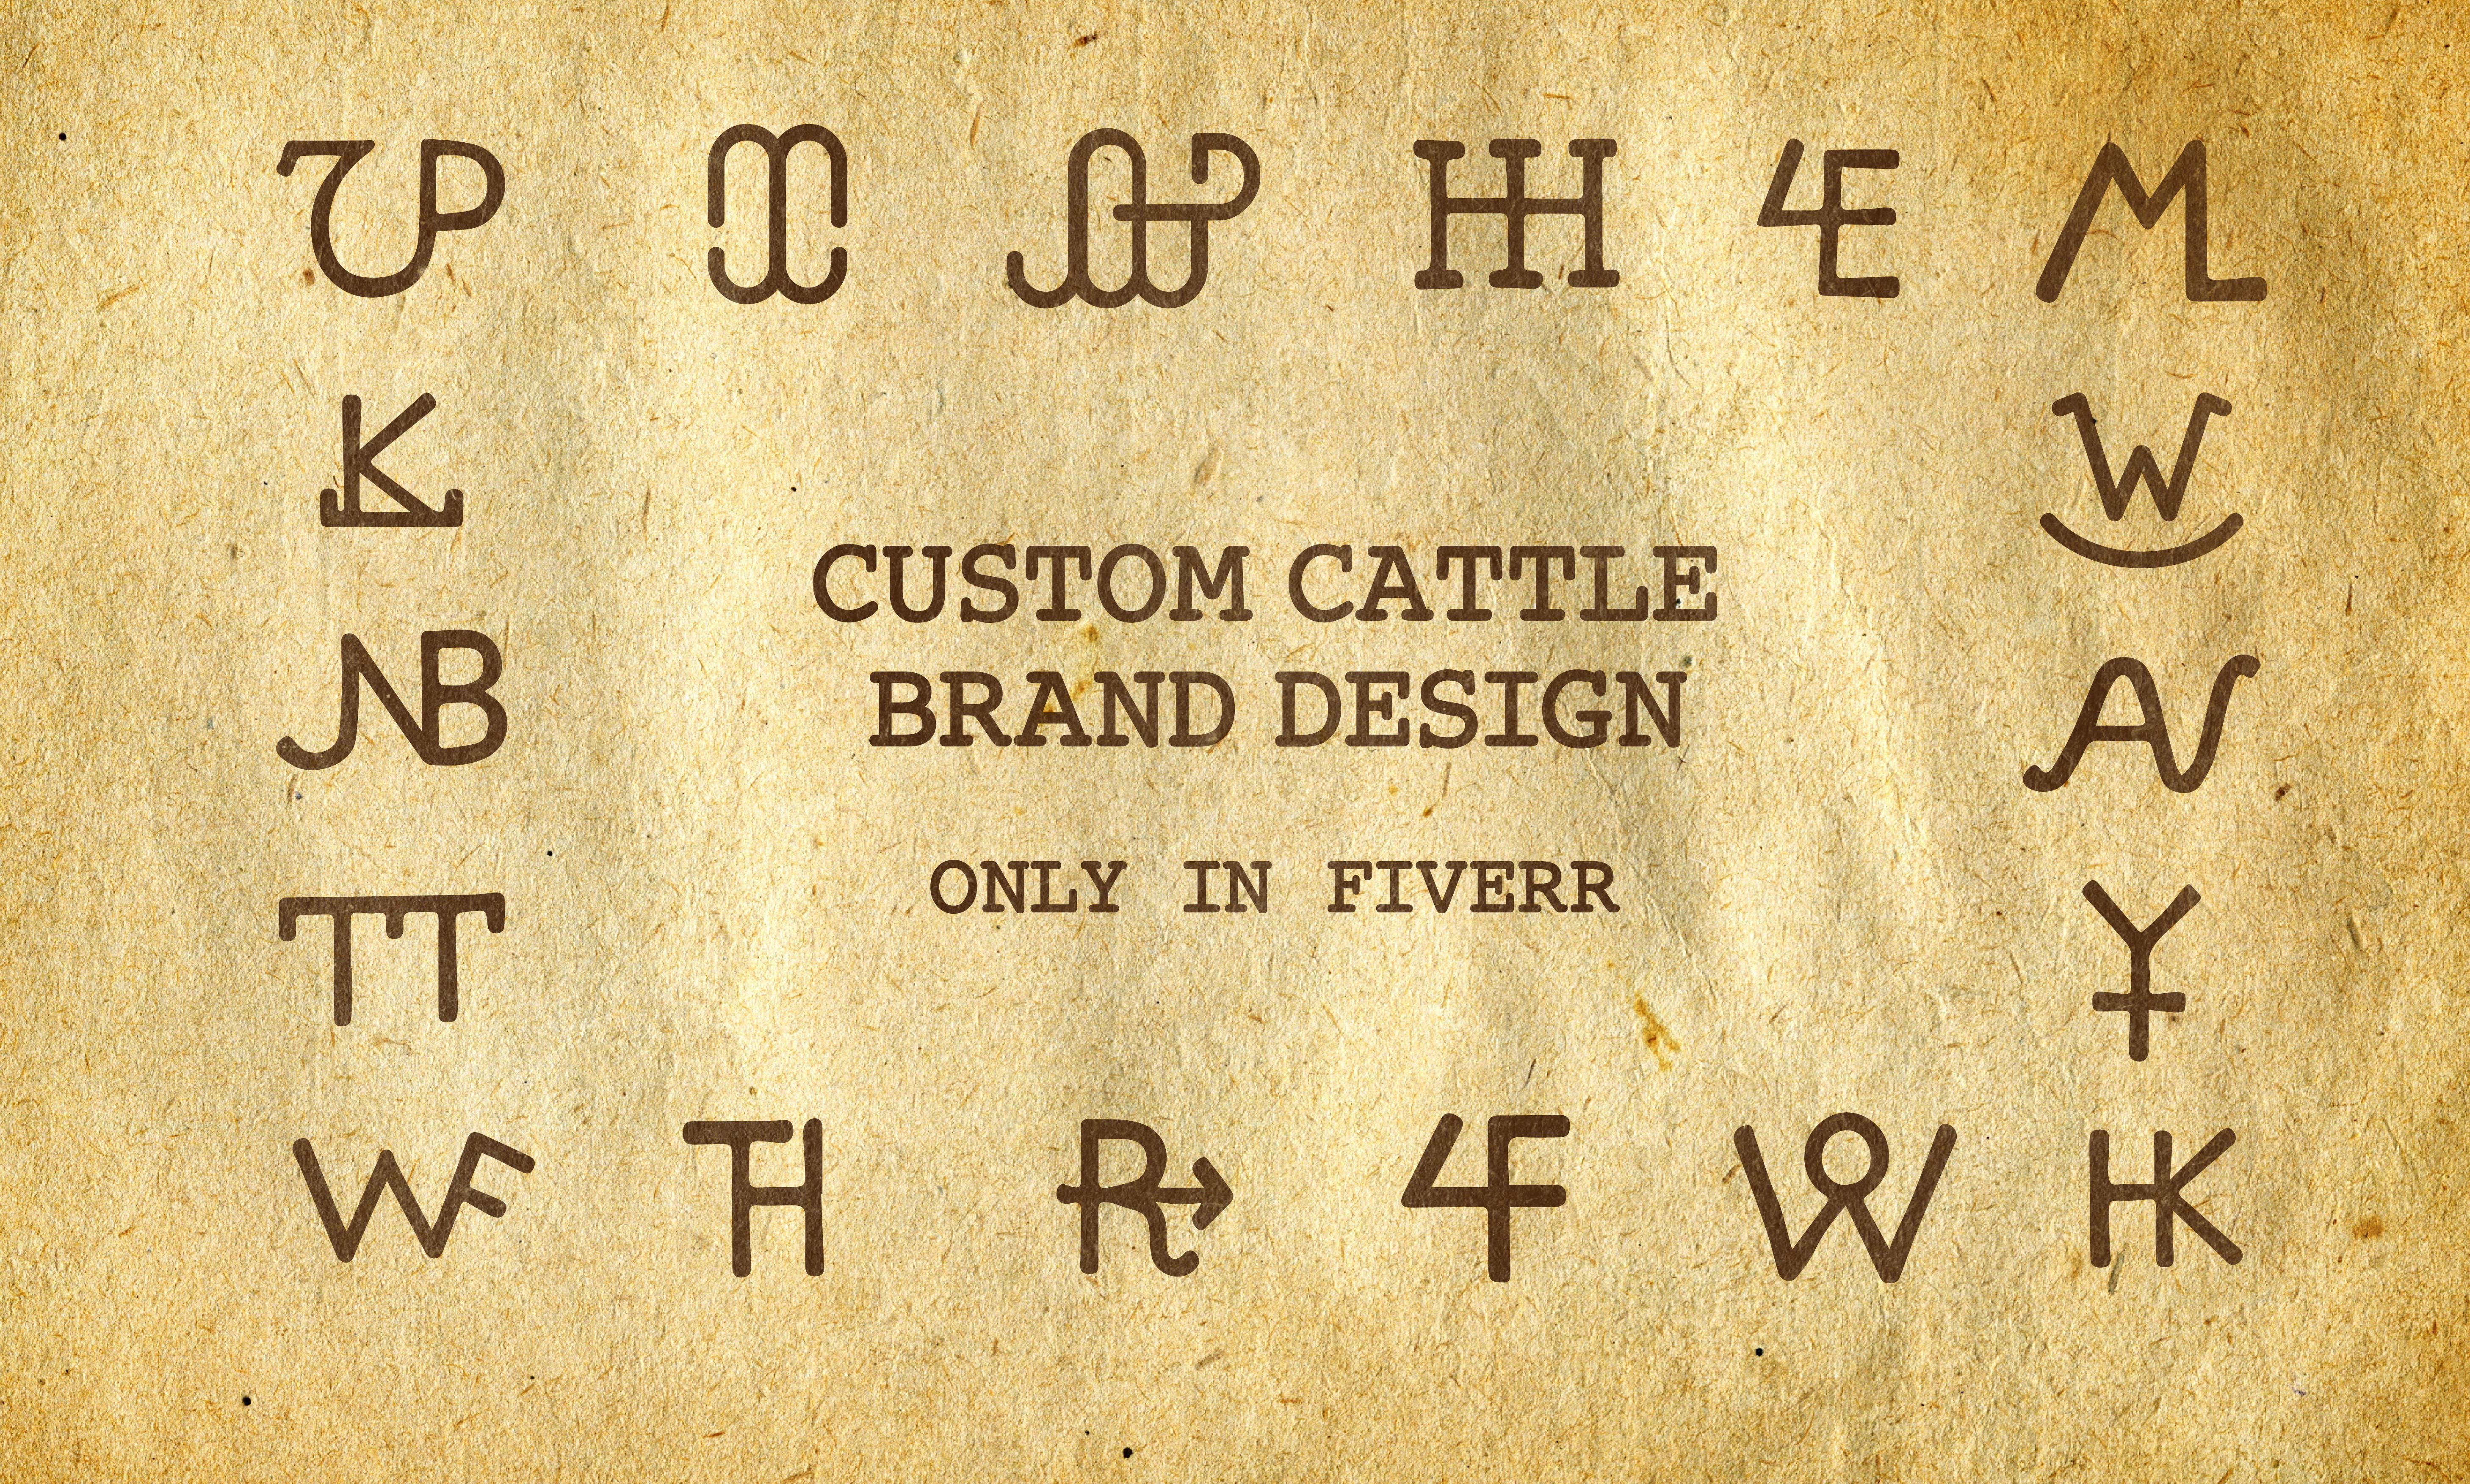 Design a custom cattle brand ranch logo by Sadmanshakib713